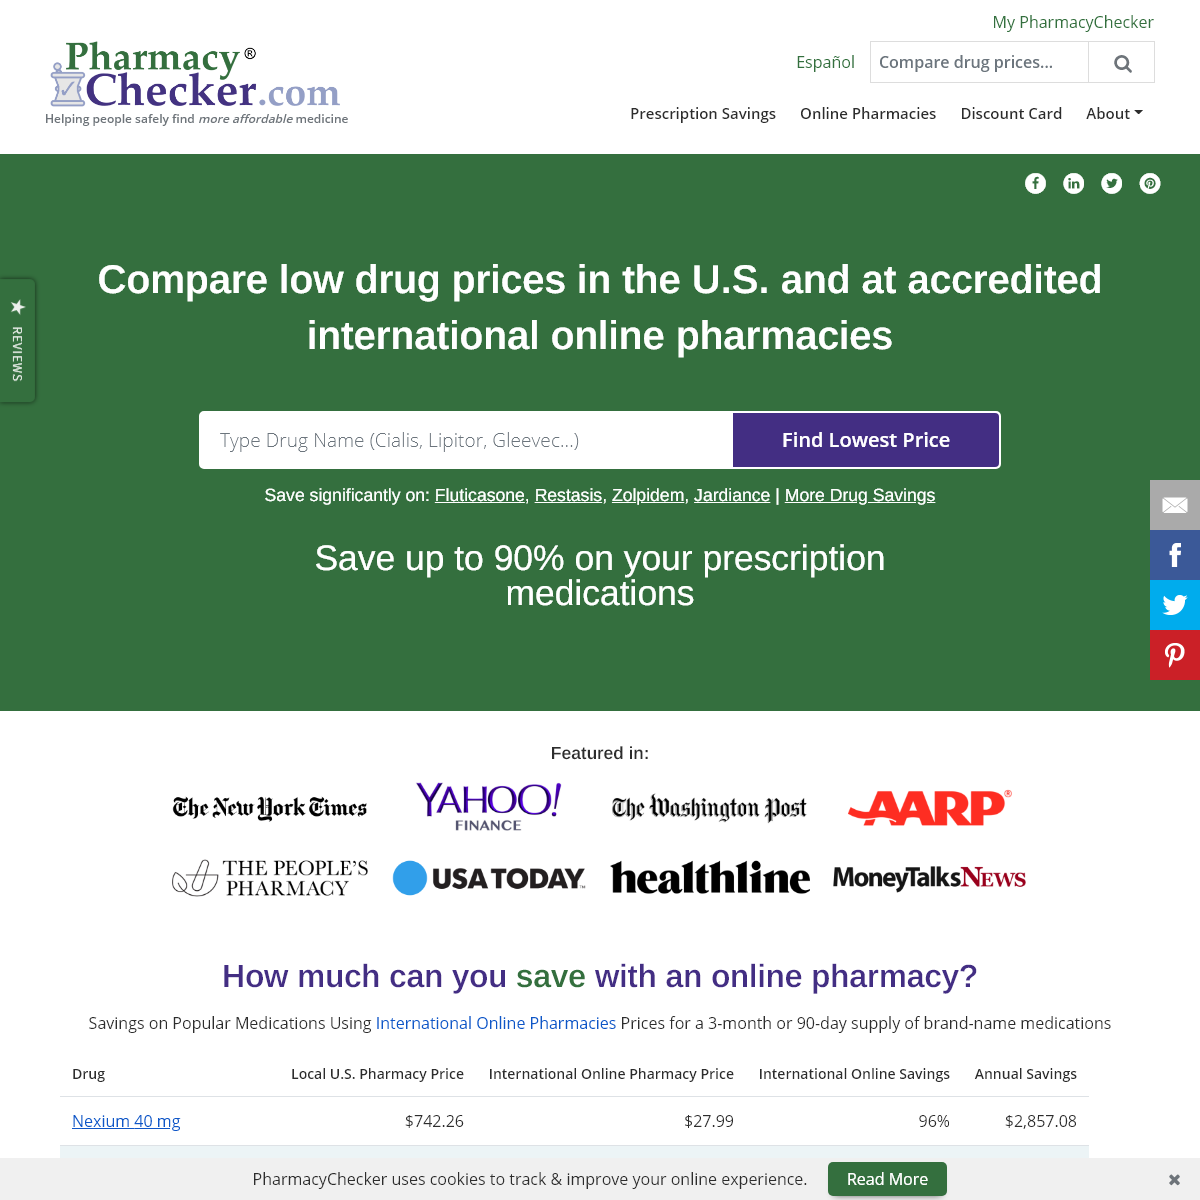 A complete backup of pharmacychecker.com